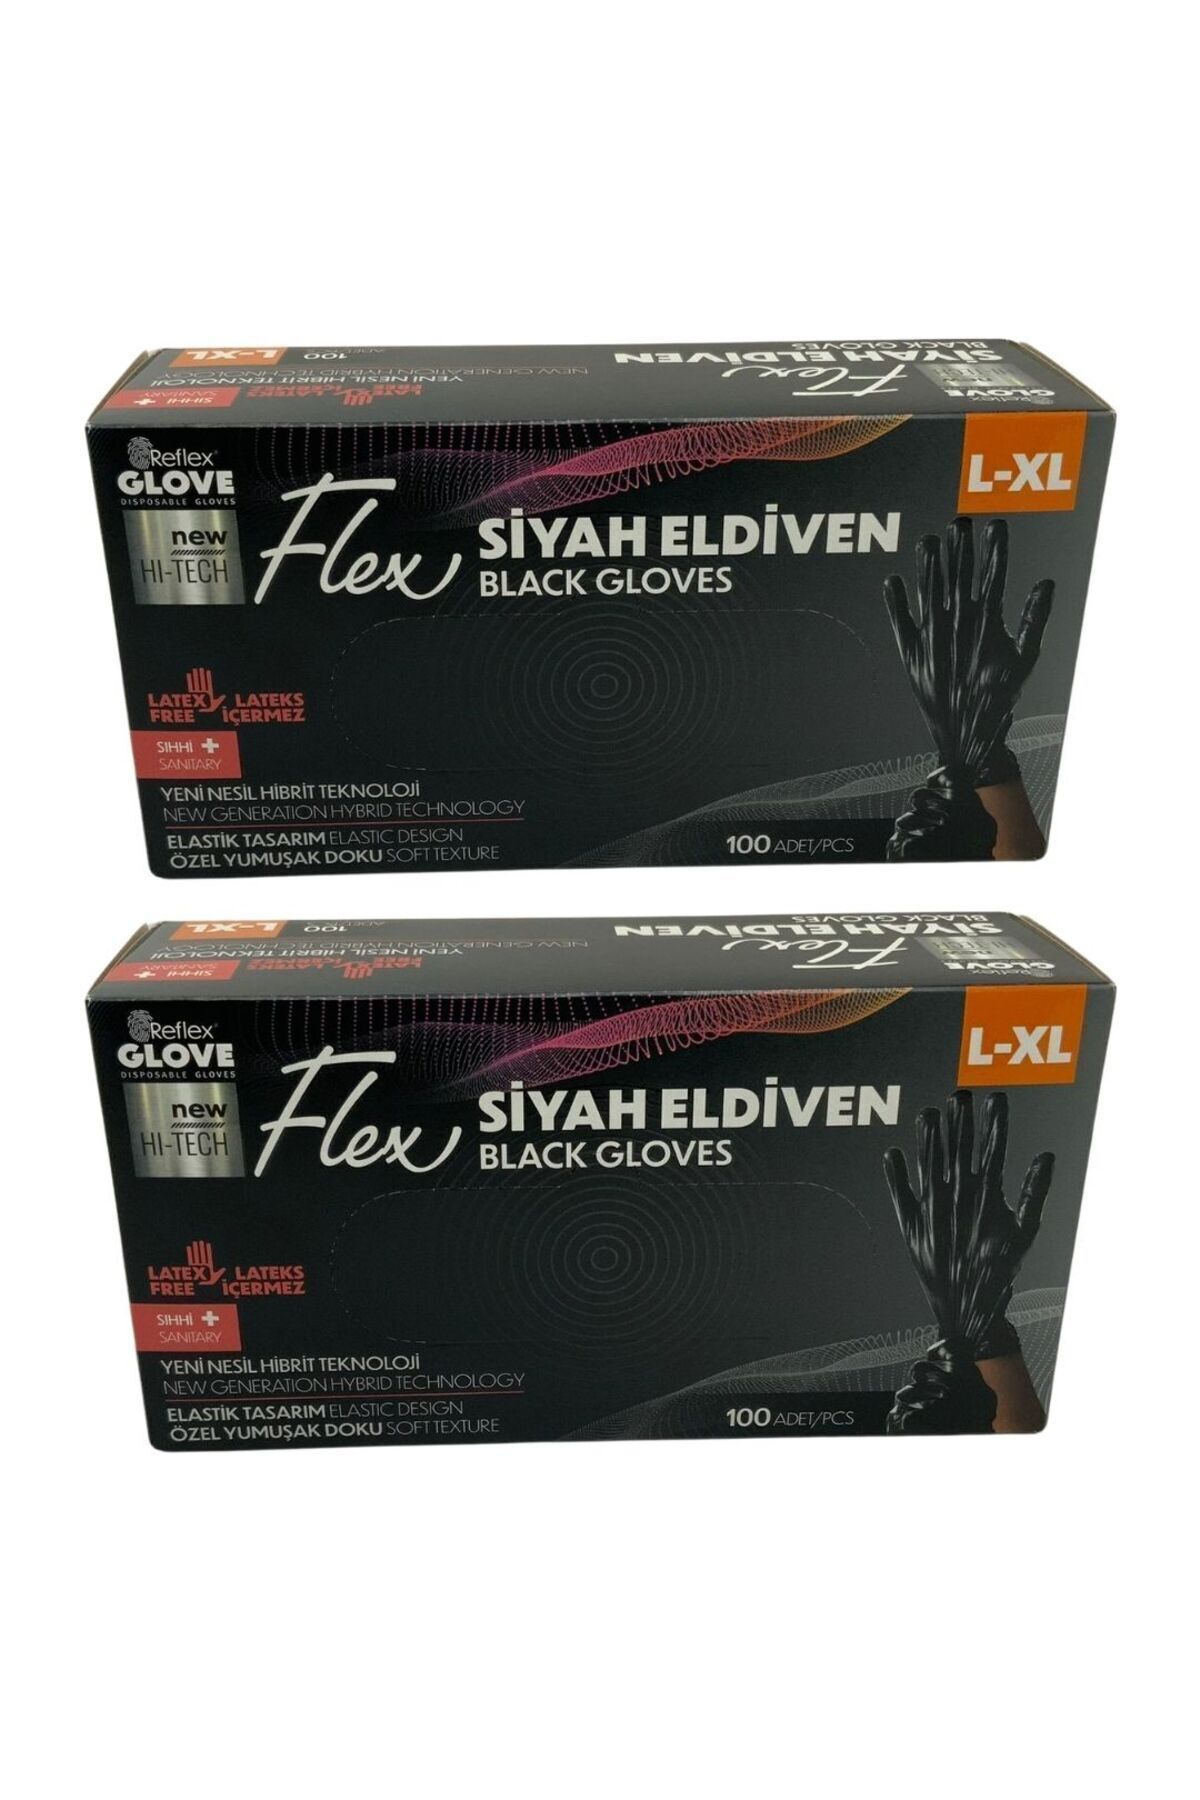 Reflex Glove Flex Siyah Eldiven L-XL 100 Adet 2 Adet